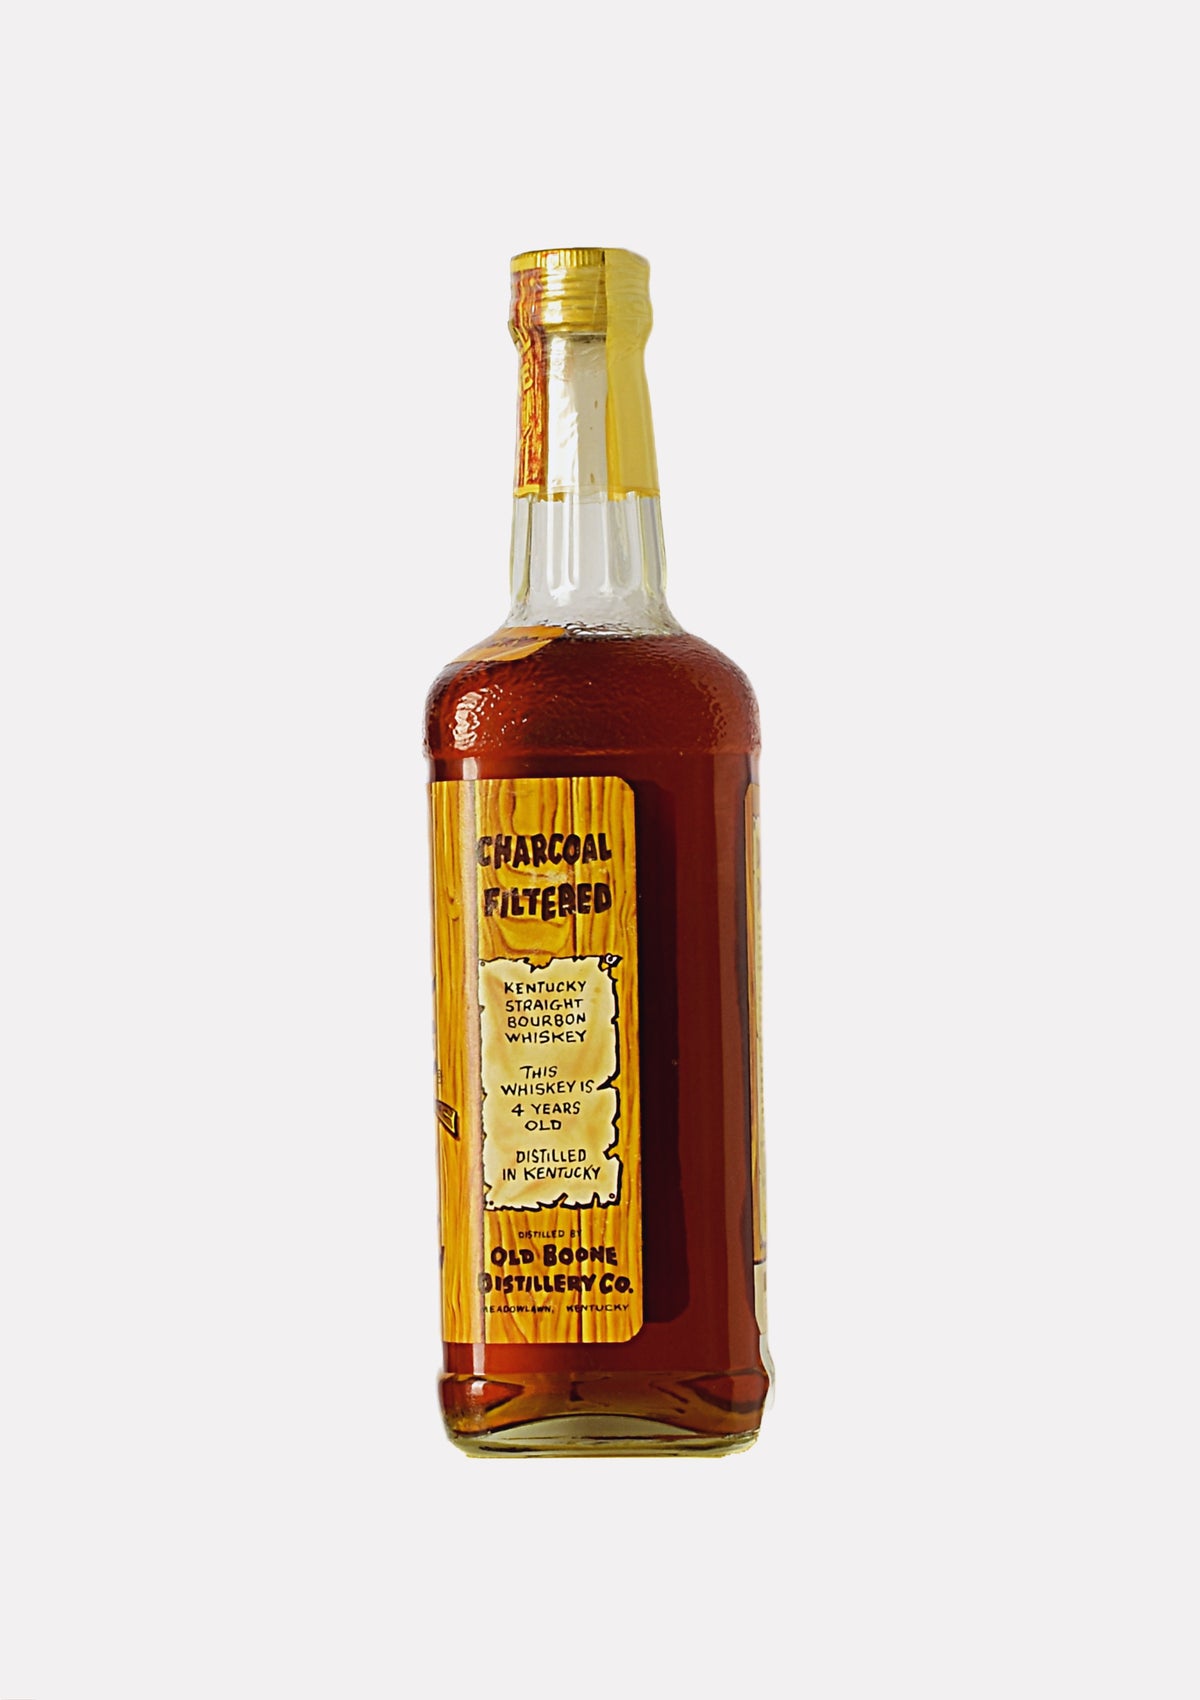 Daniel Boone Kentucky Straight Bourbon Whiskey